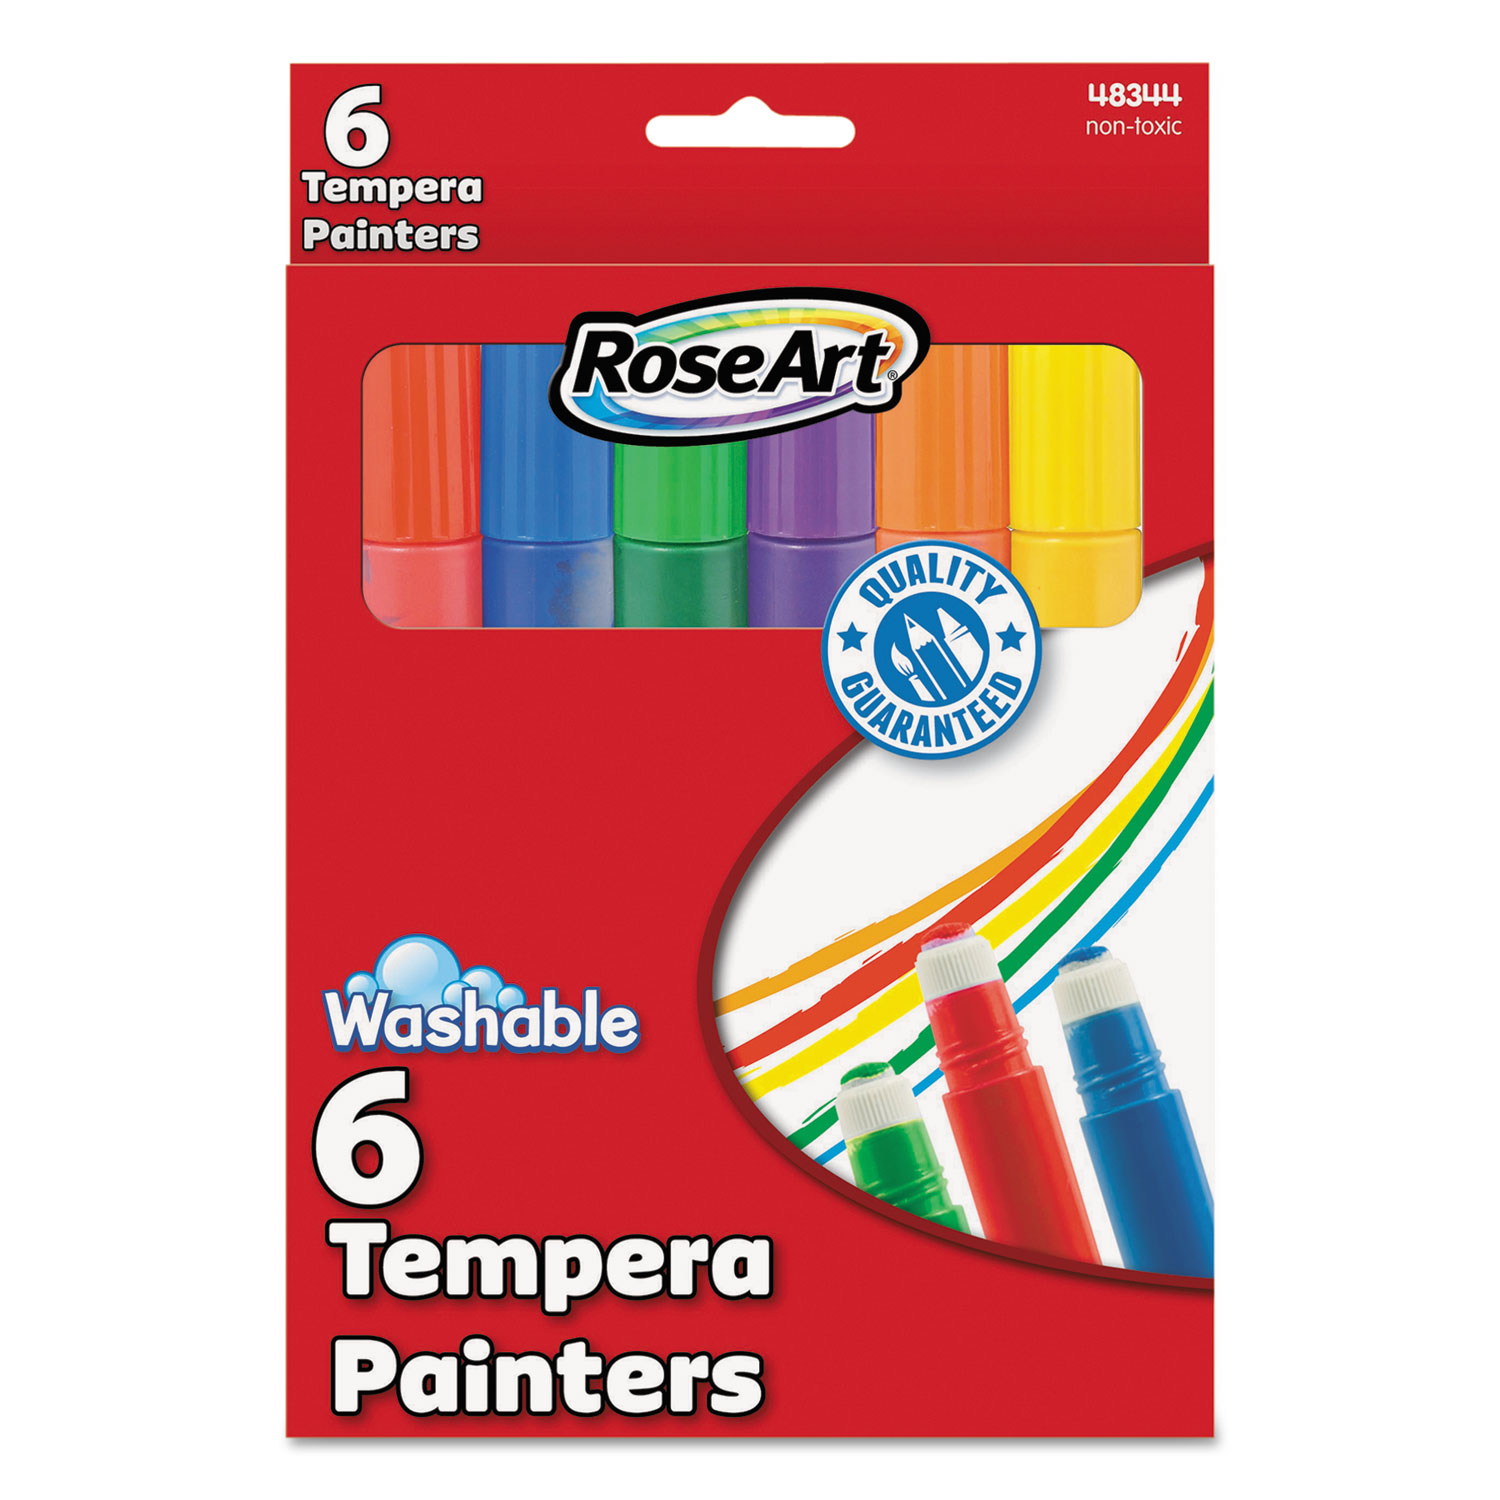 Washable Tempera Painters, Assorted, 6 per set